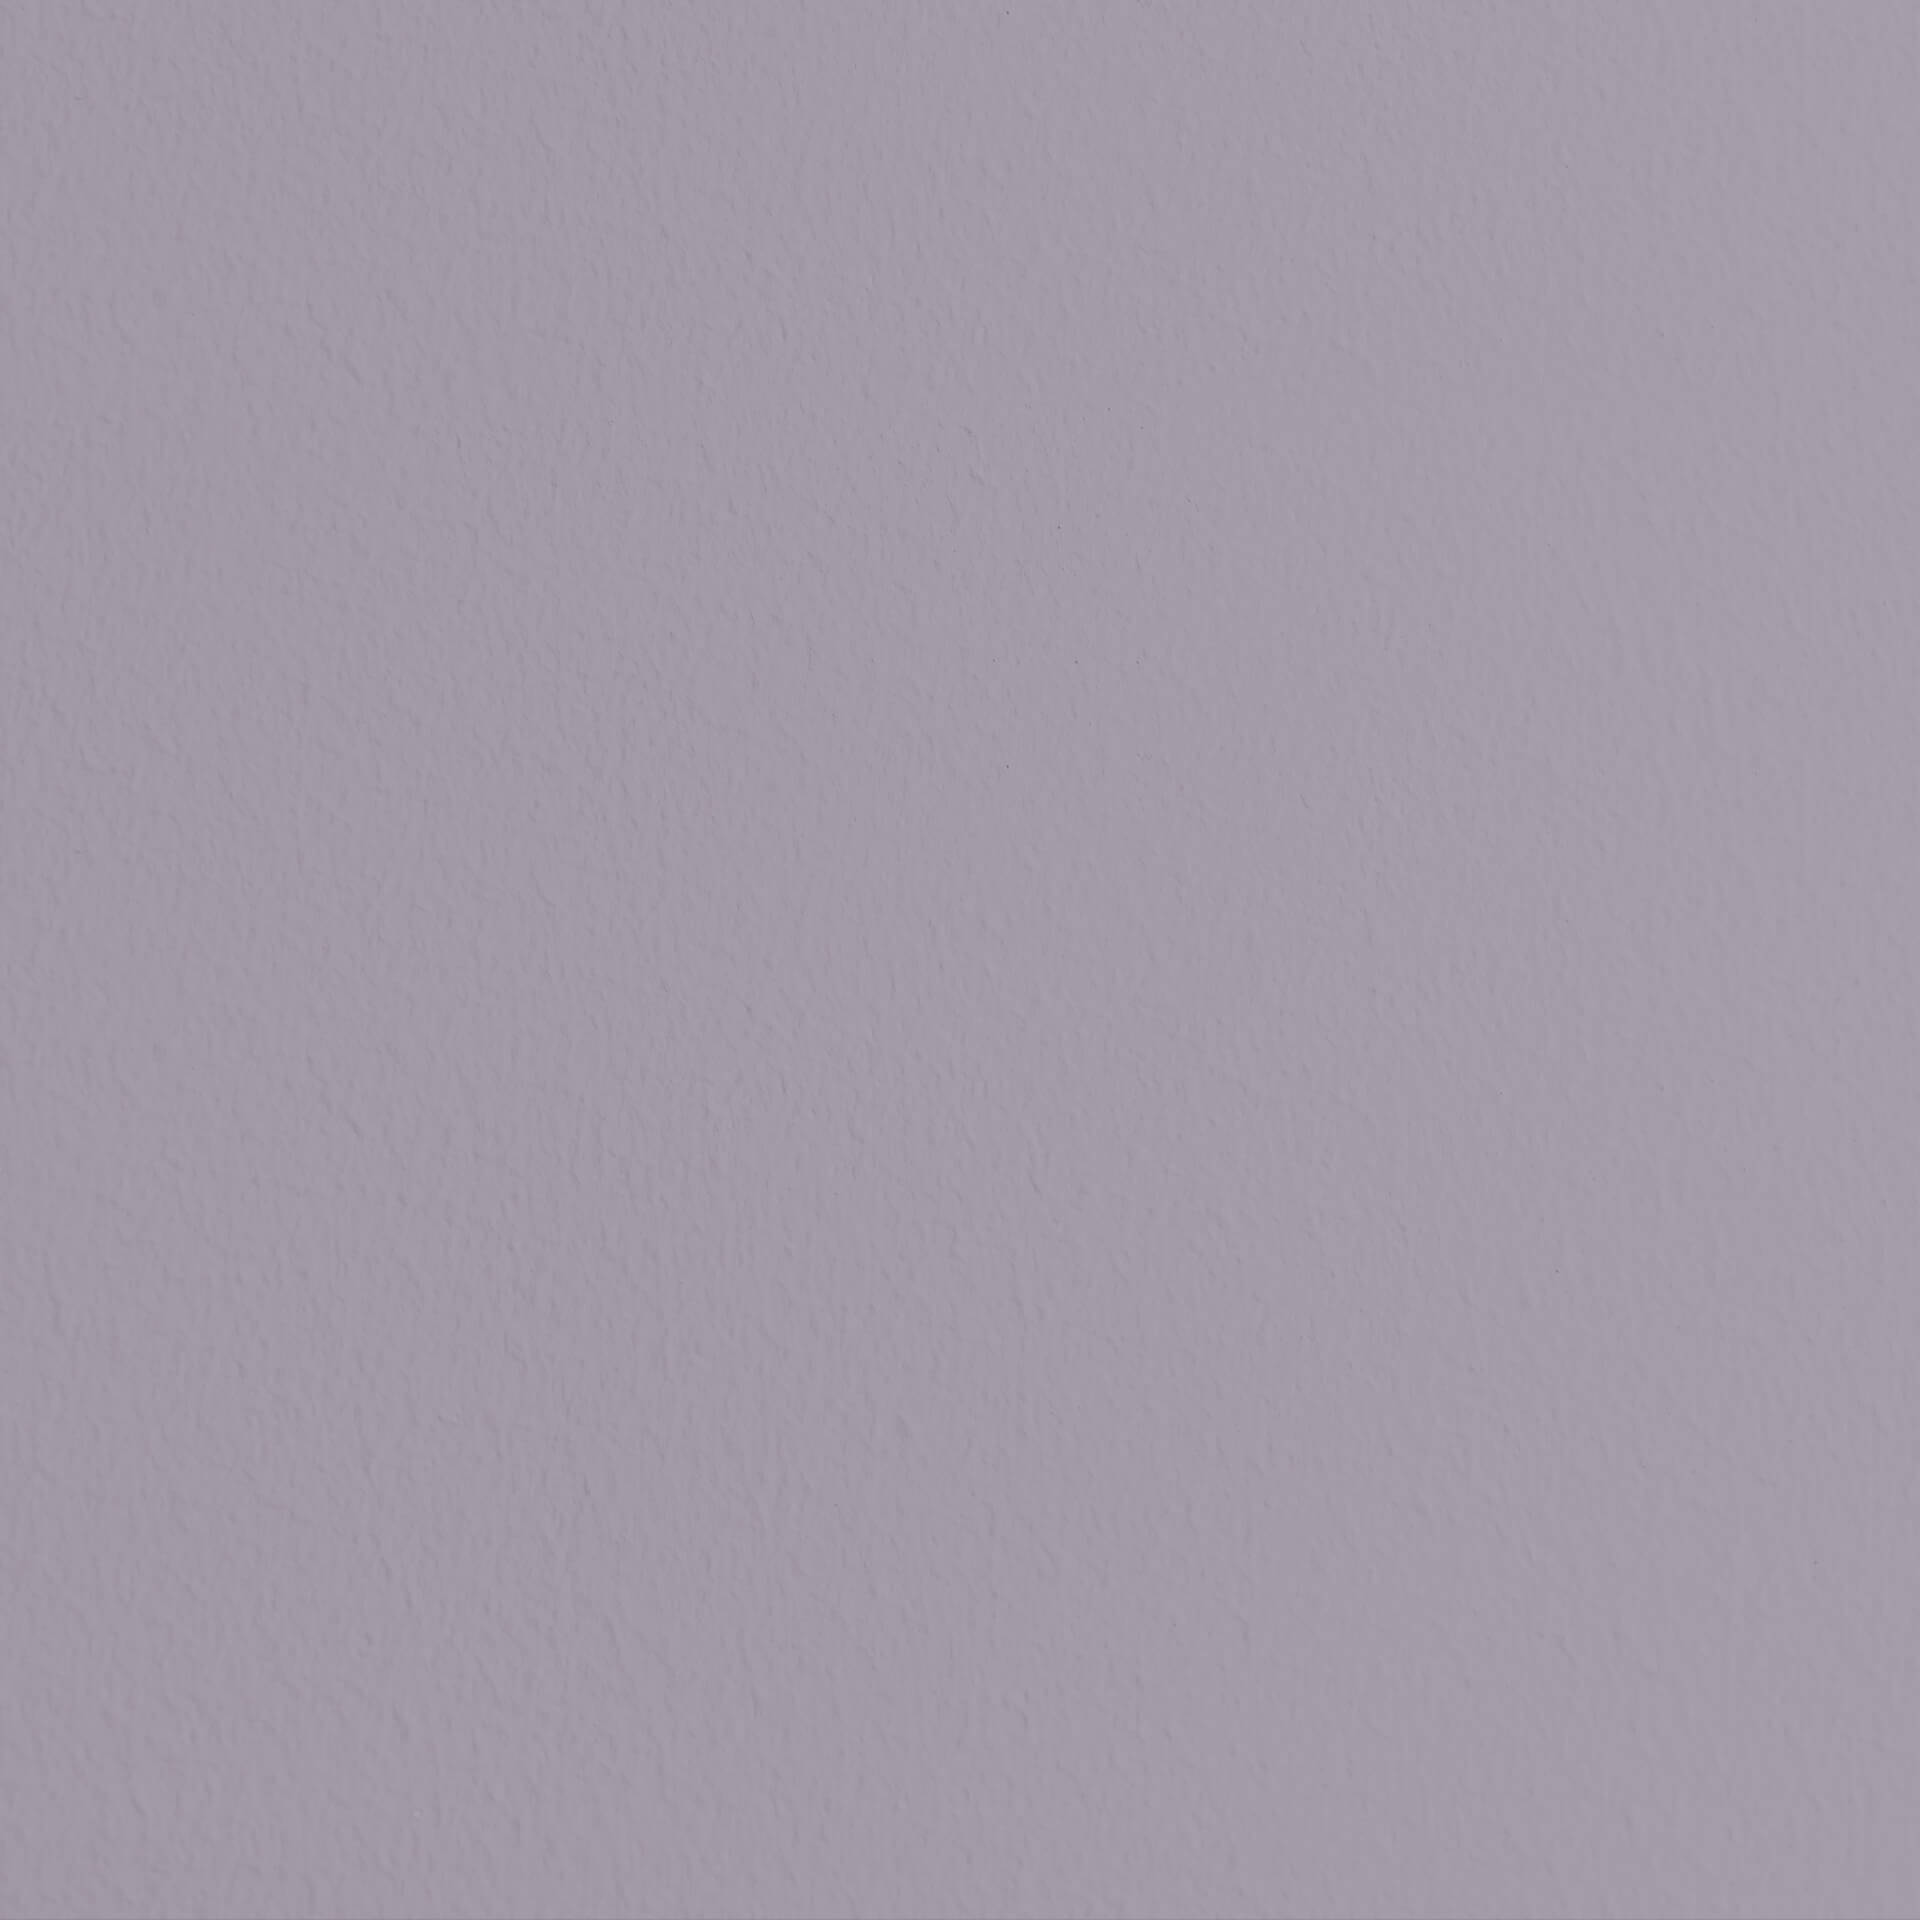 Mylands Lavender Garden No. 30 - Marble Matt Emulsion / Wandfarbe, 5L